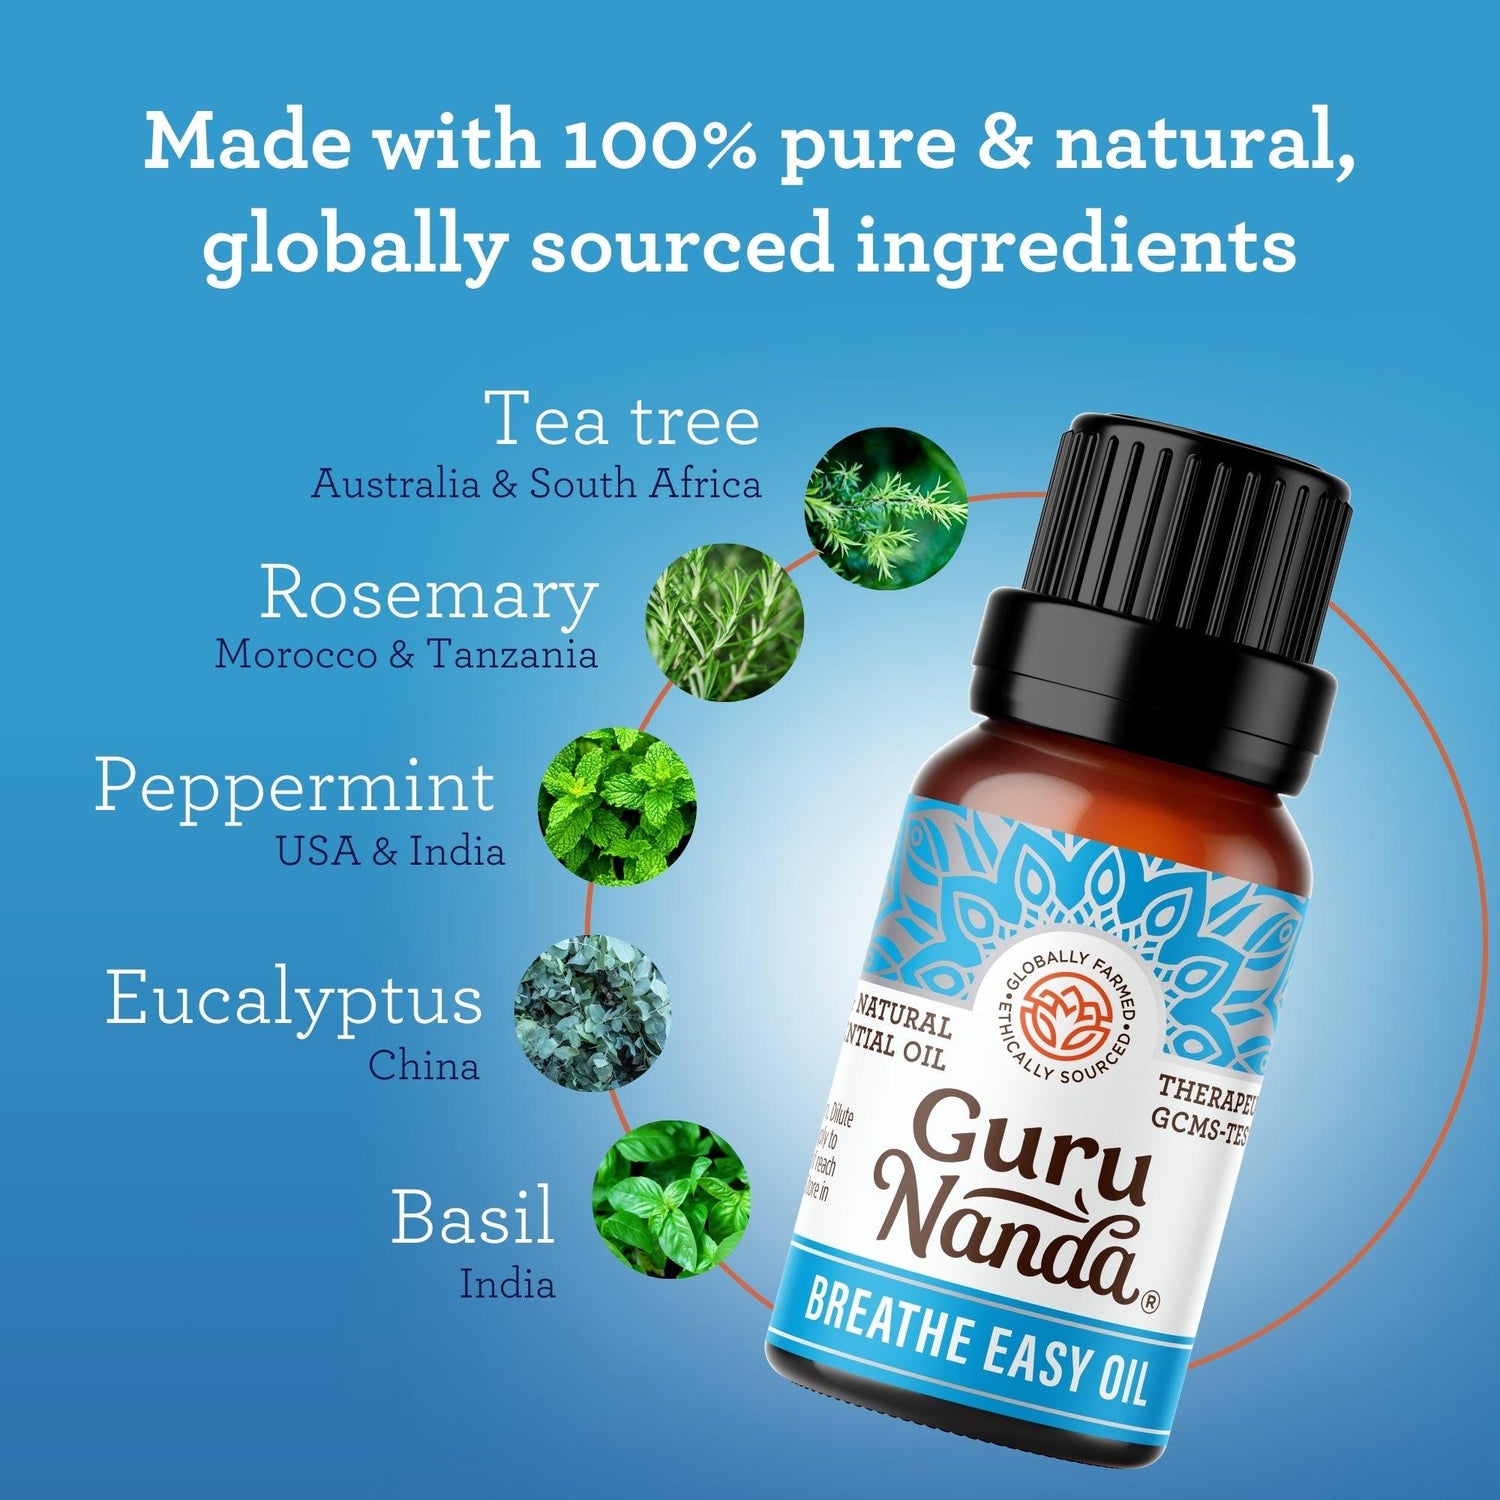 Breathe Easy Essential Oil Blend (2-Pack) - GuruNanda